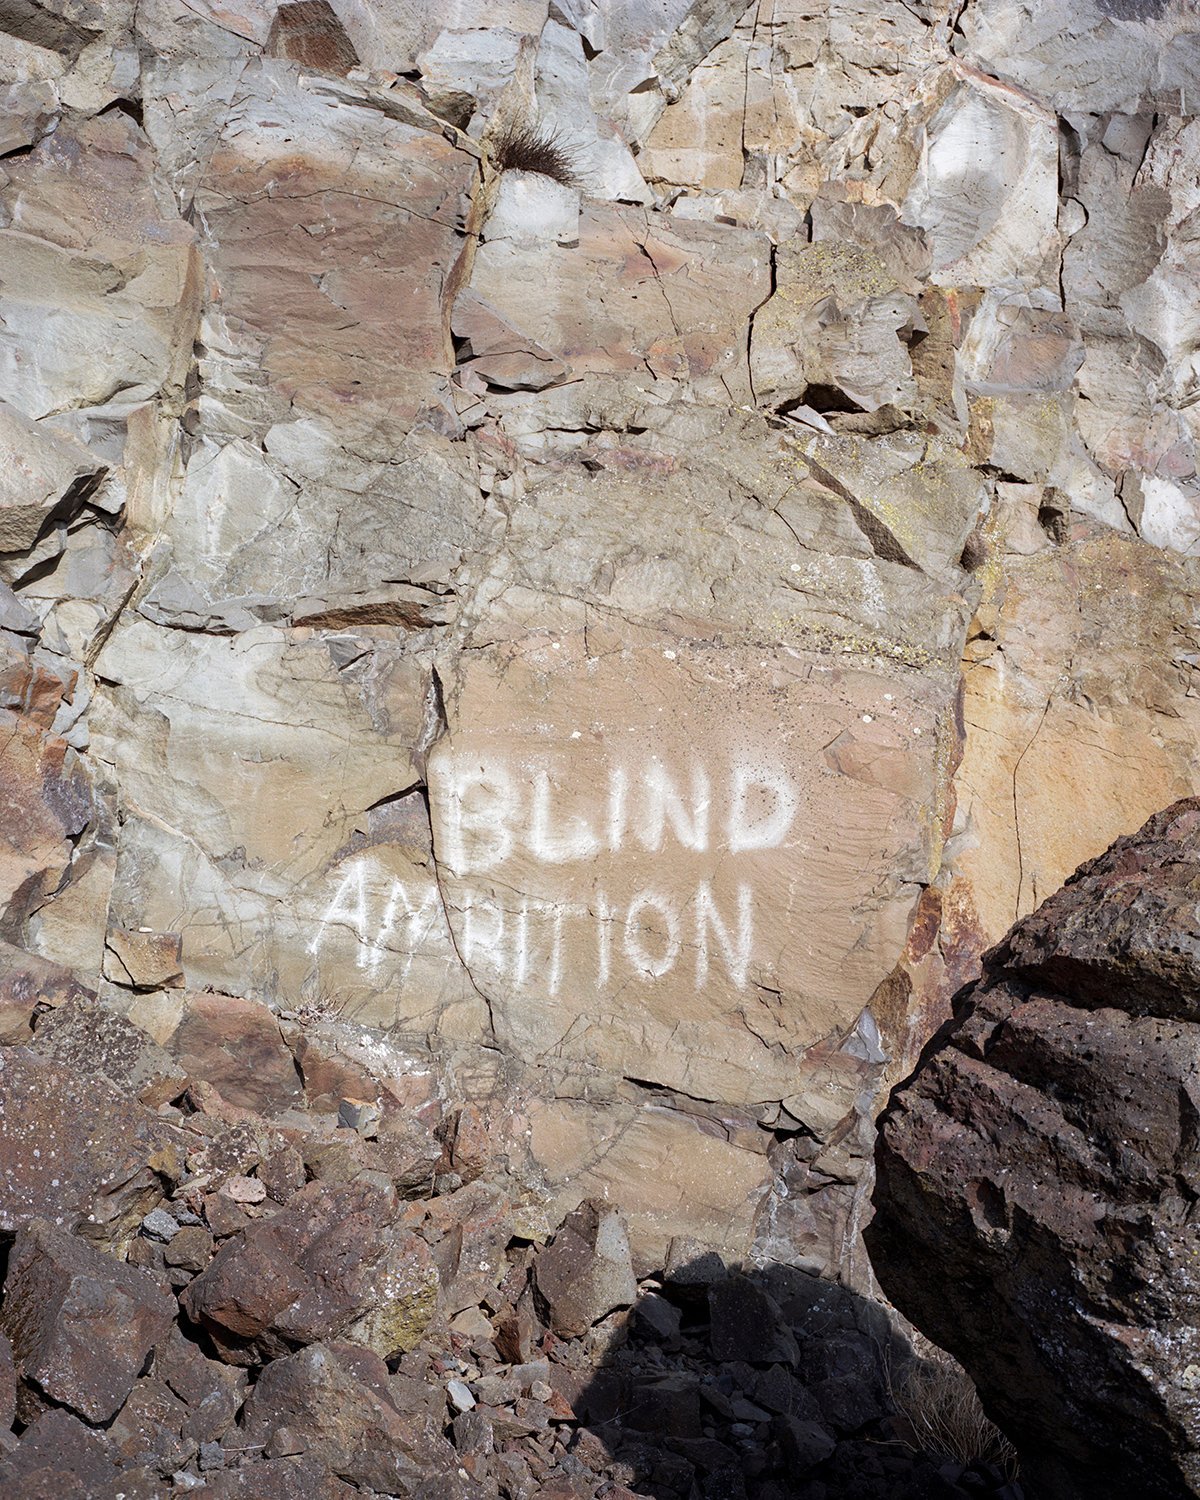 "Blind Ambition" | Mamiya 7II + Kodak Portra 160 (Copy)